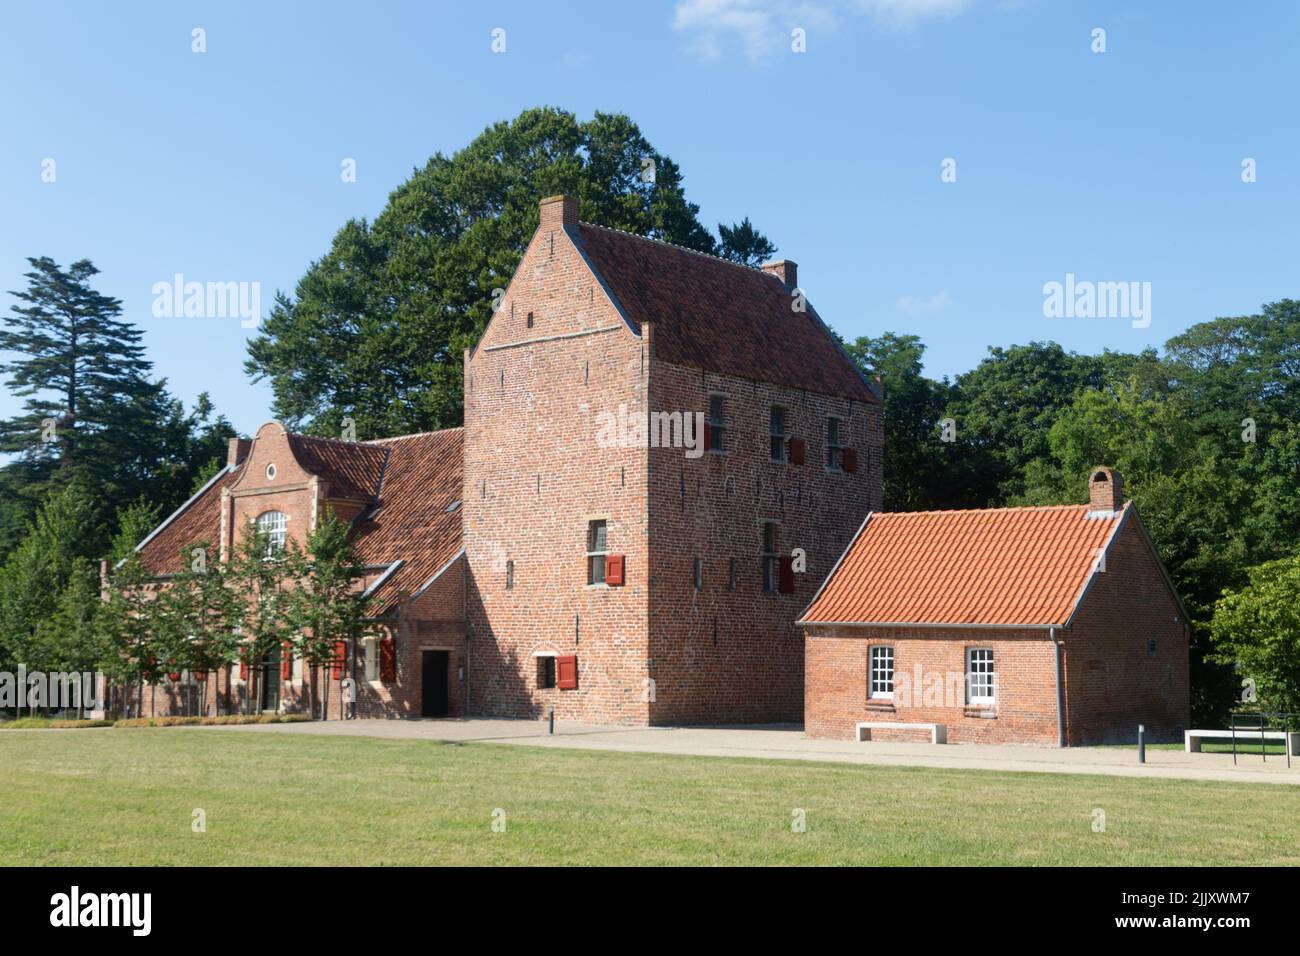 The chiefdom castle Steinhaus Bunderhee in Bunde, East Frisia, Lower Saxony, Germany. Stock Photo